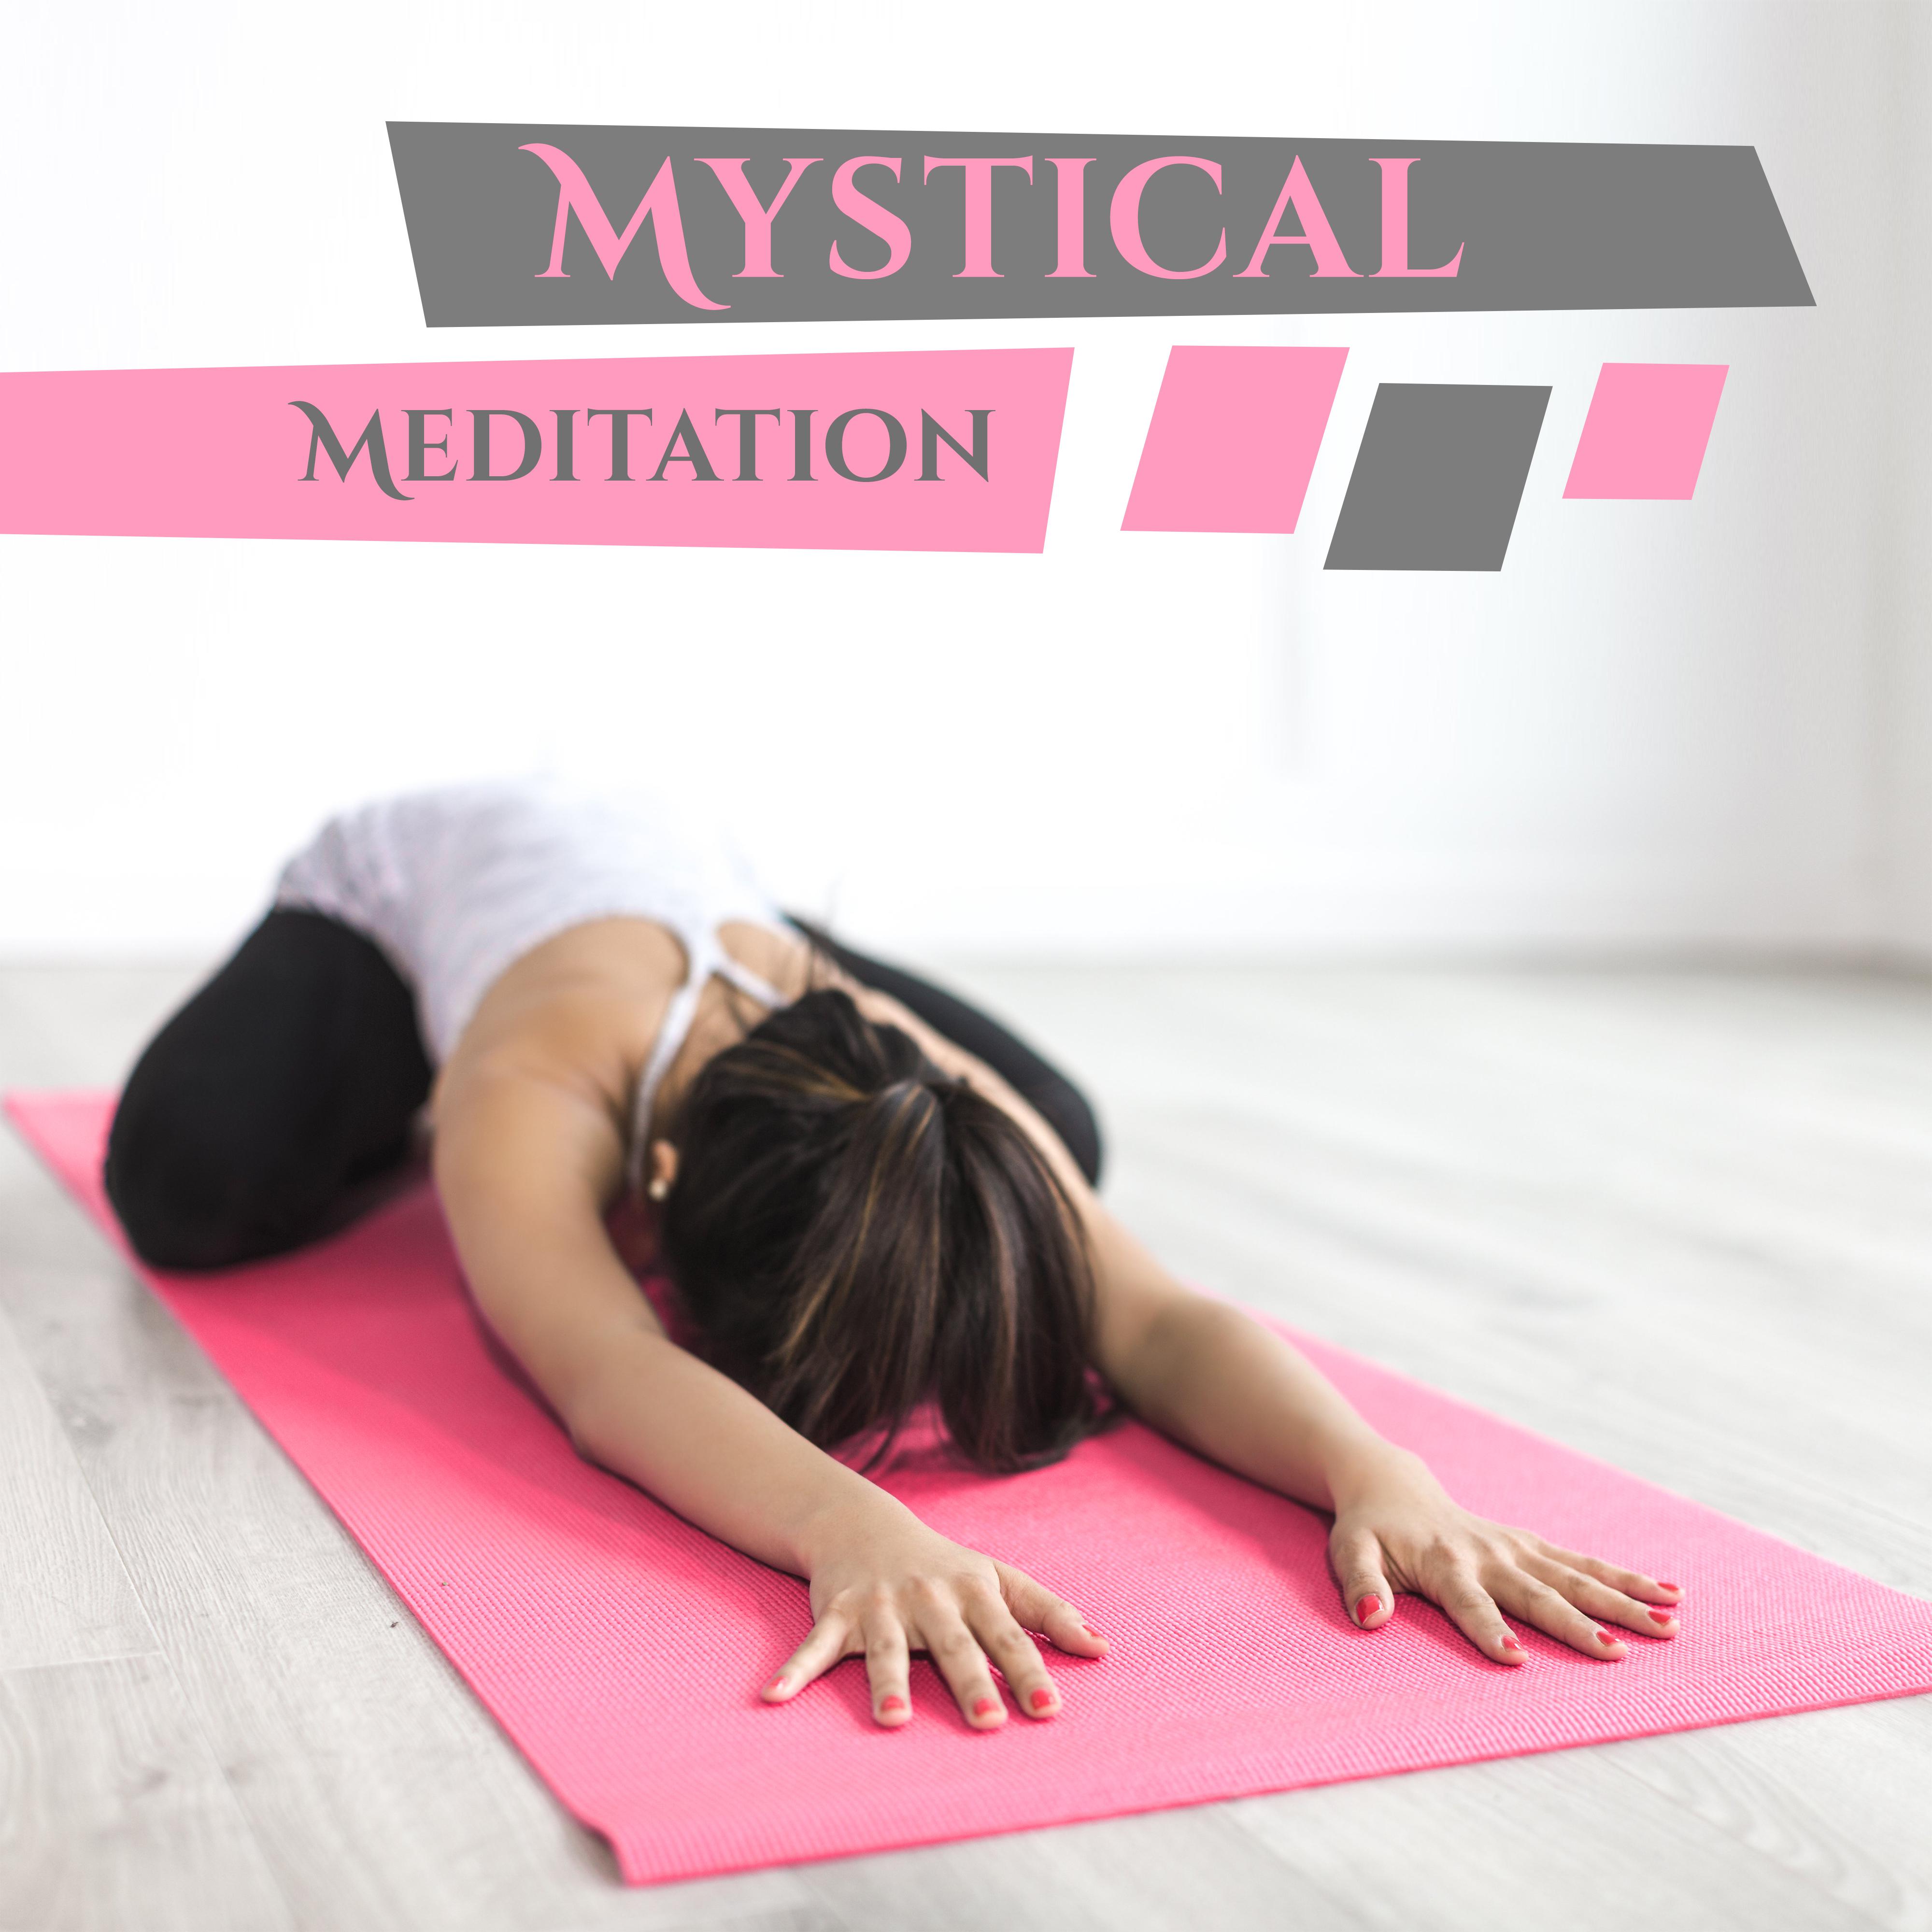 Mystical Meditation – Soothing Sounds to Meditate, Yoga Training, Buddha Lounge, New Age Calmness